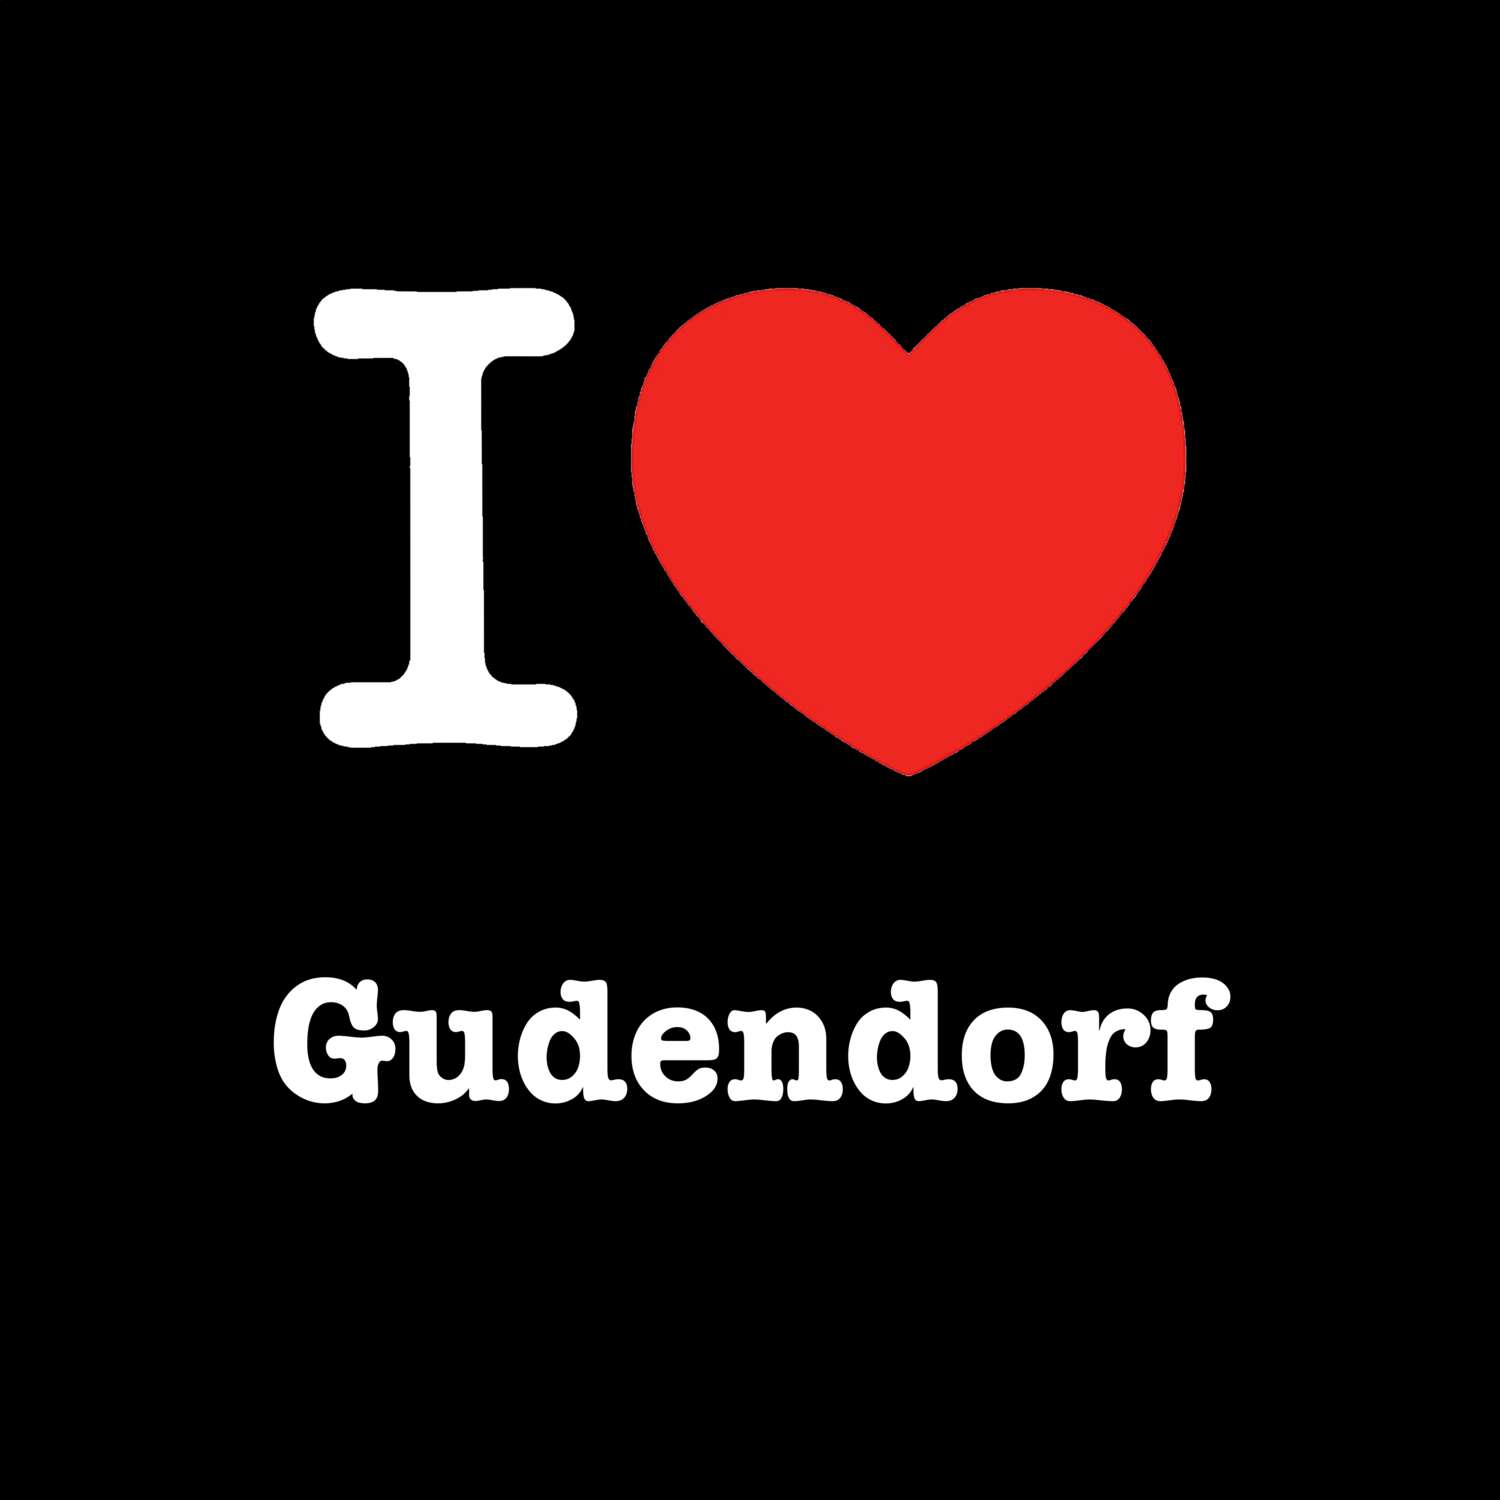 Gudendorf T-Shirt »I love«